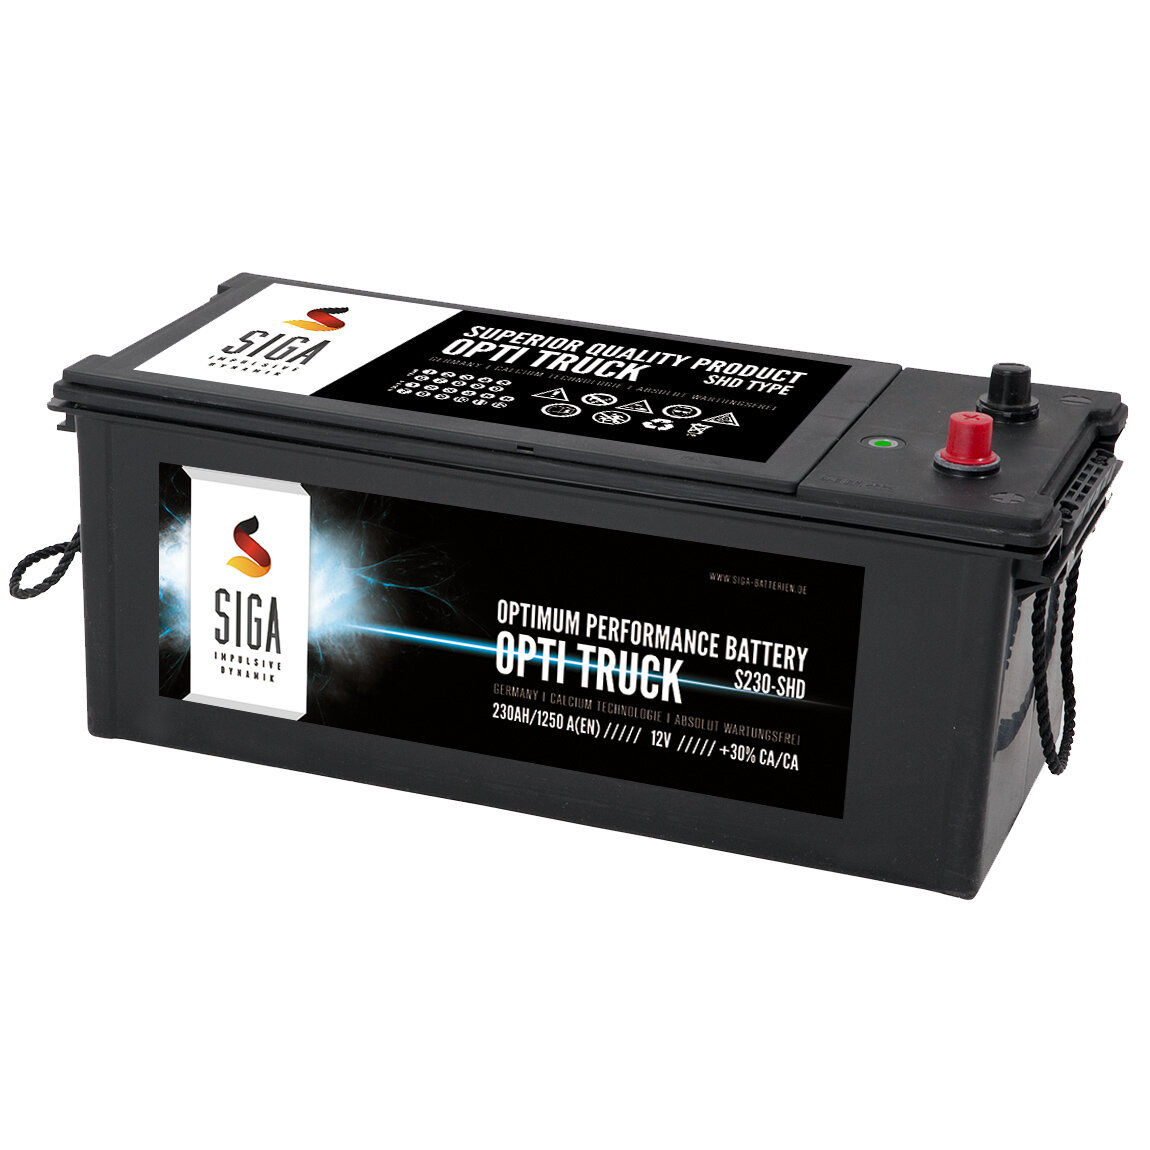 LANGZEIT LKW Batterie 12V 230Ah 1500A/EN Starterbatterie Schlepper